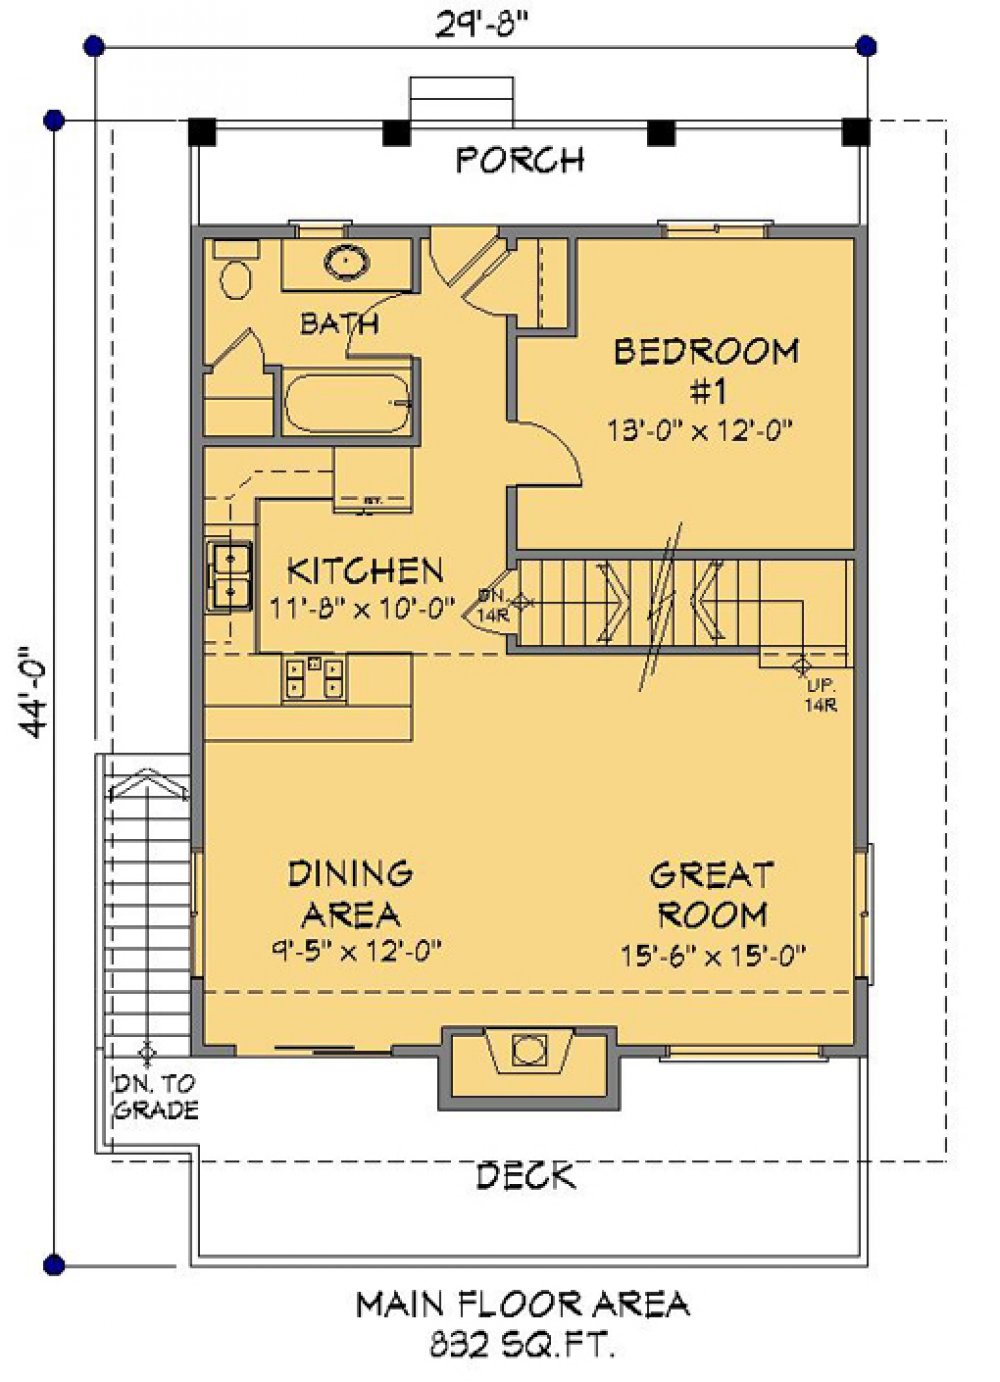 House Plan E1114-11  Main Floor Plan